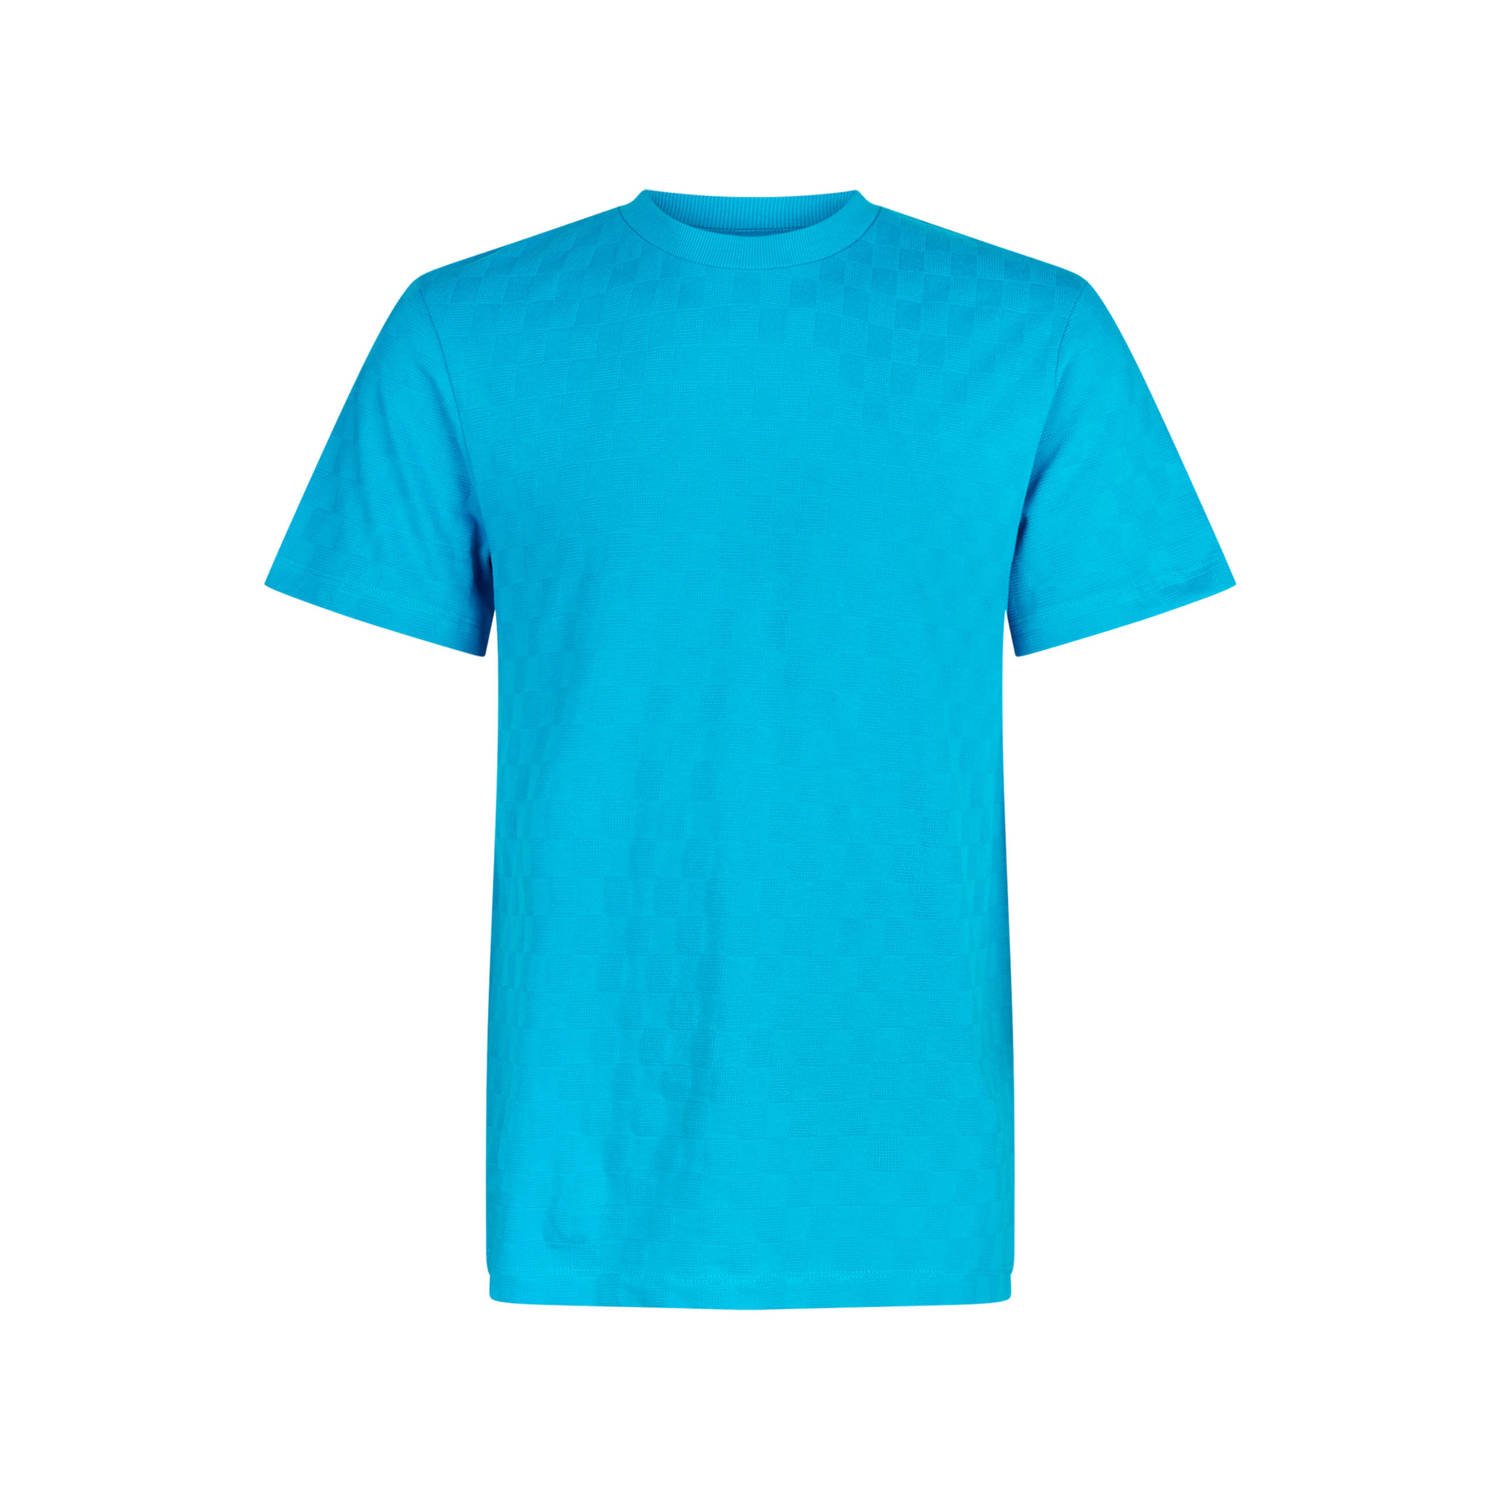 Shoeby gebreid regular fit T-shirt met ingebreid patroon blauw